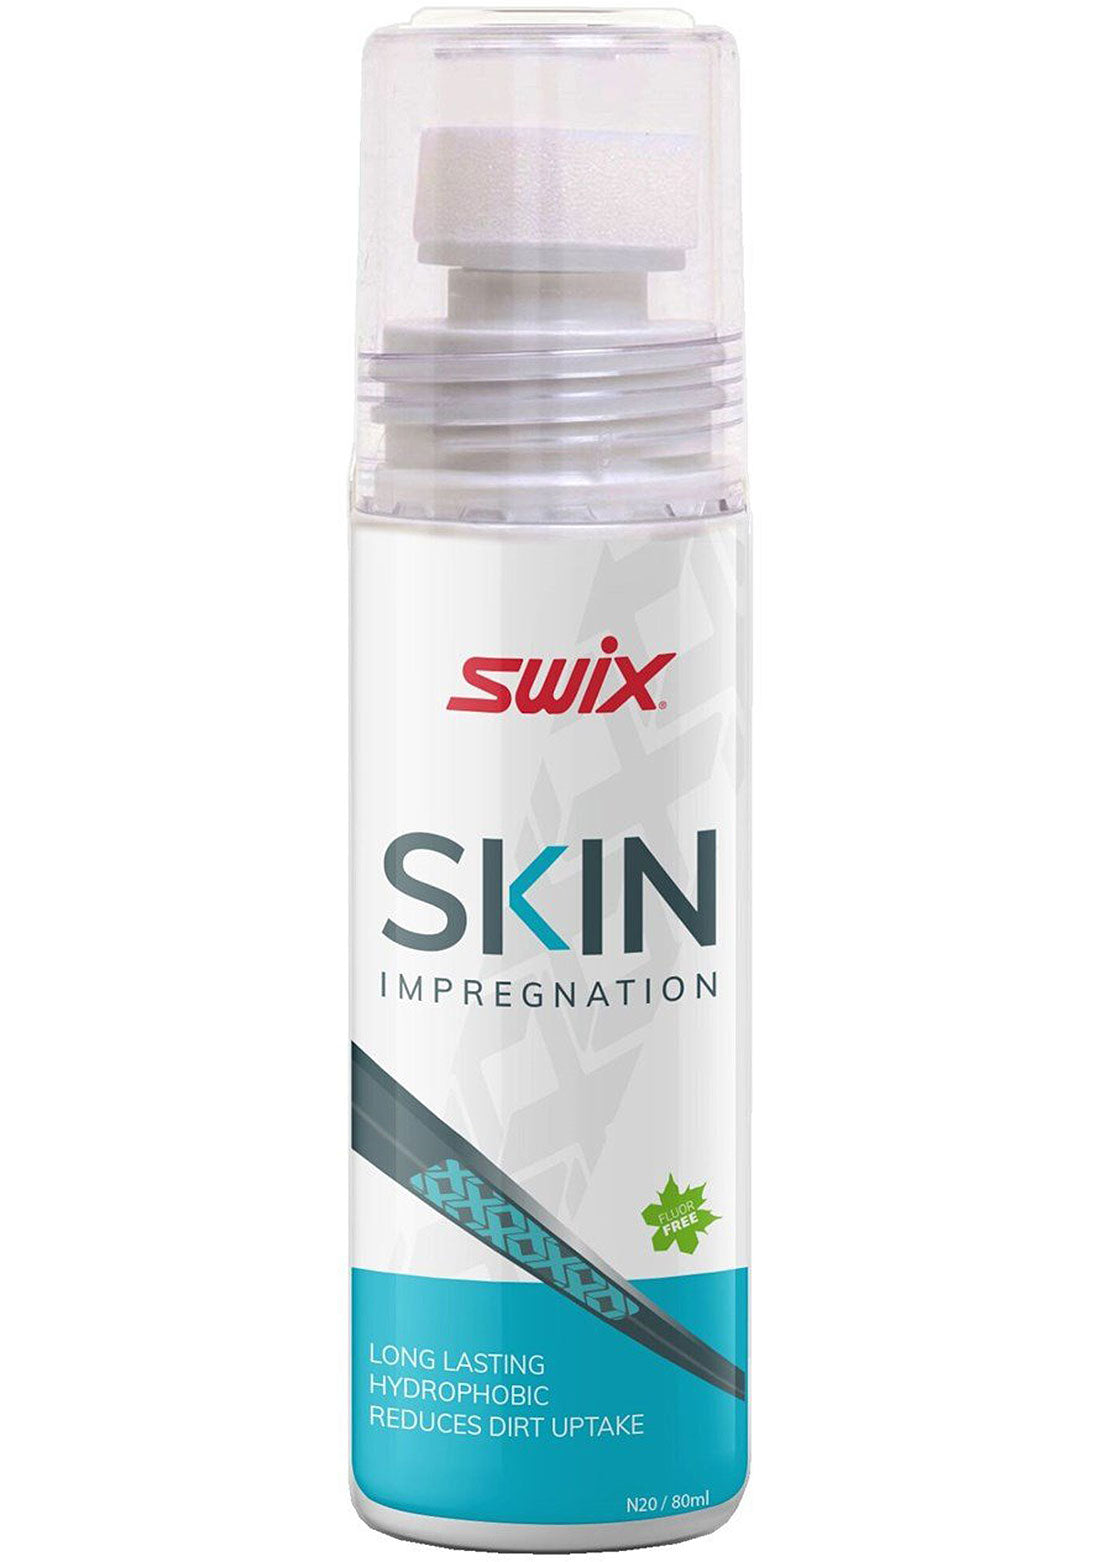 Swix Skin Impregnation